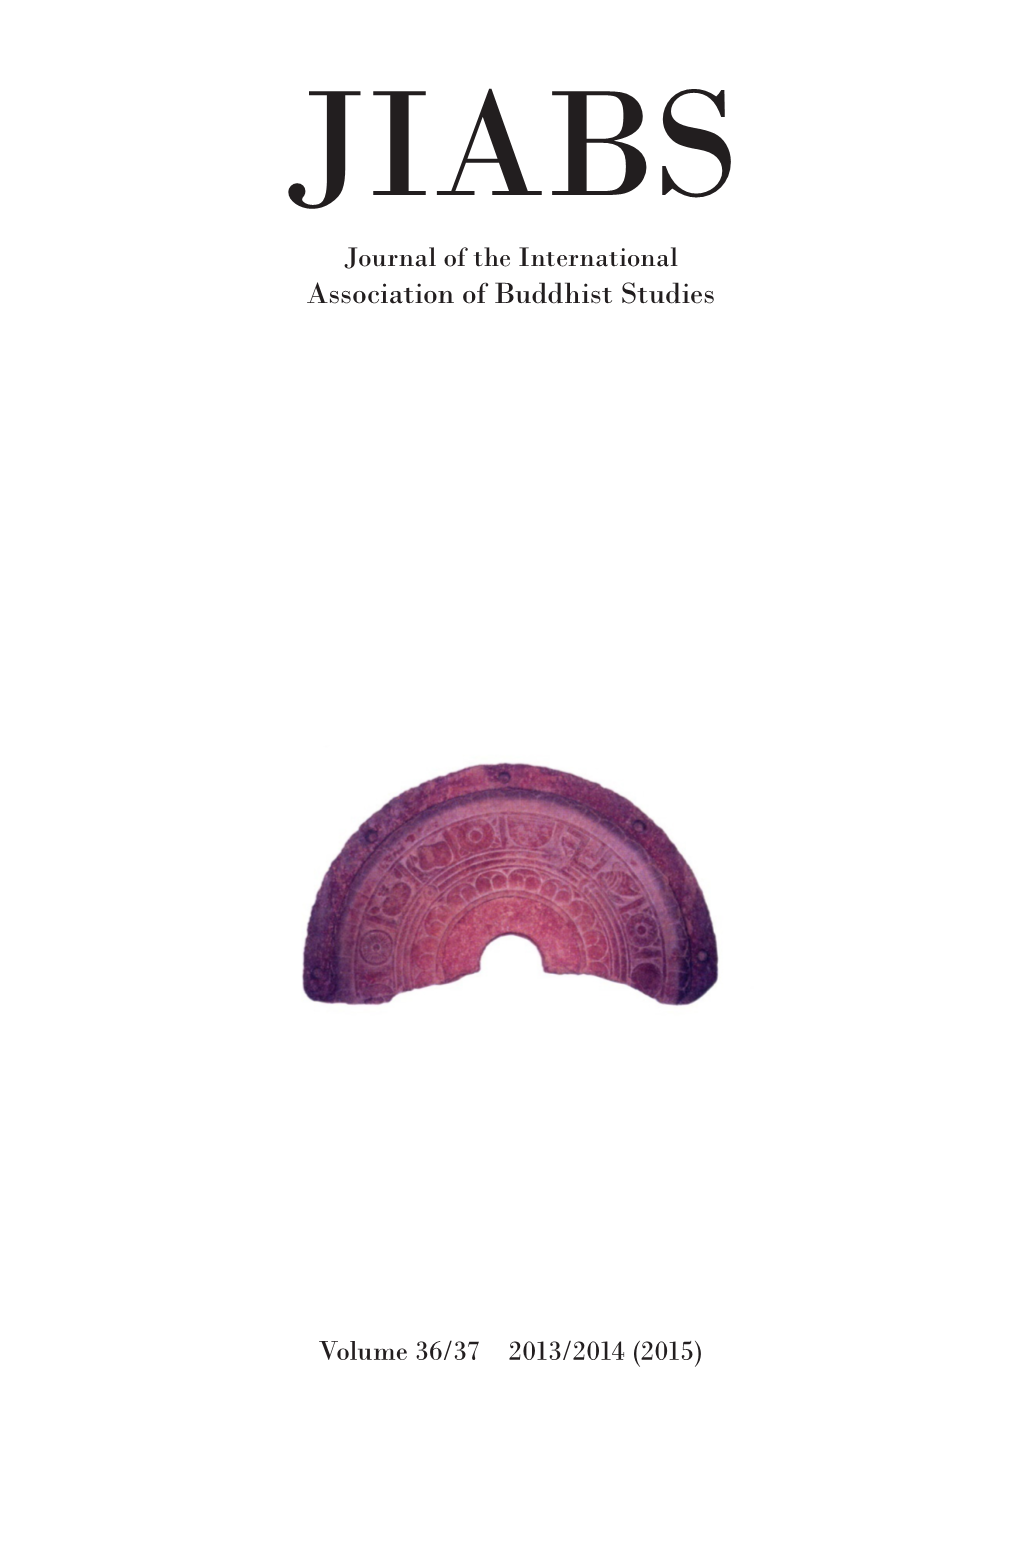 Association of Buddhist Studies